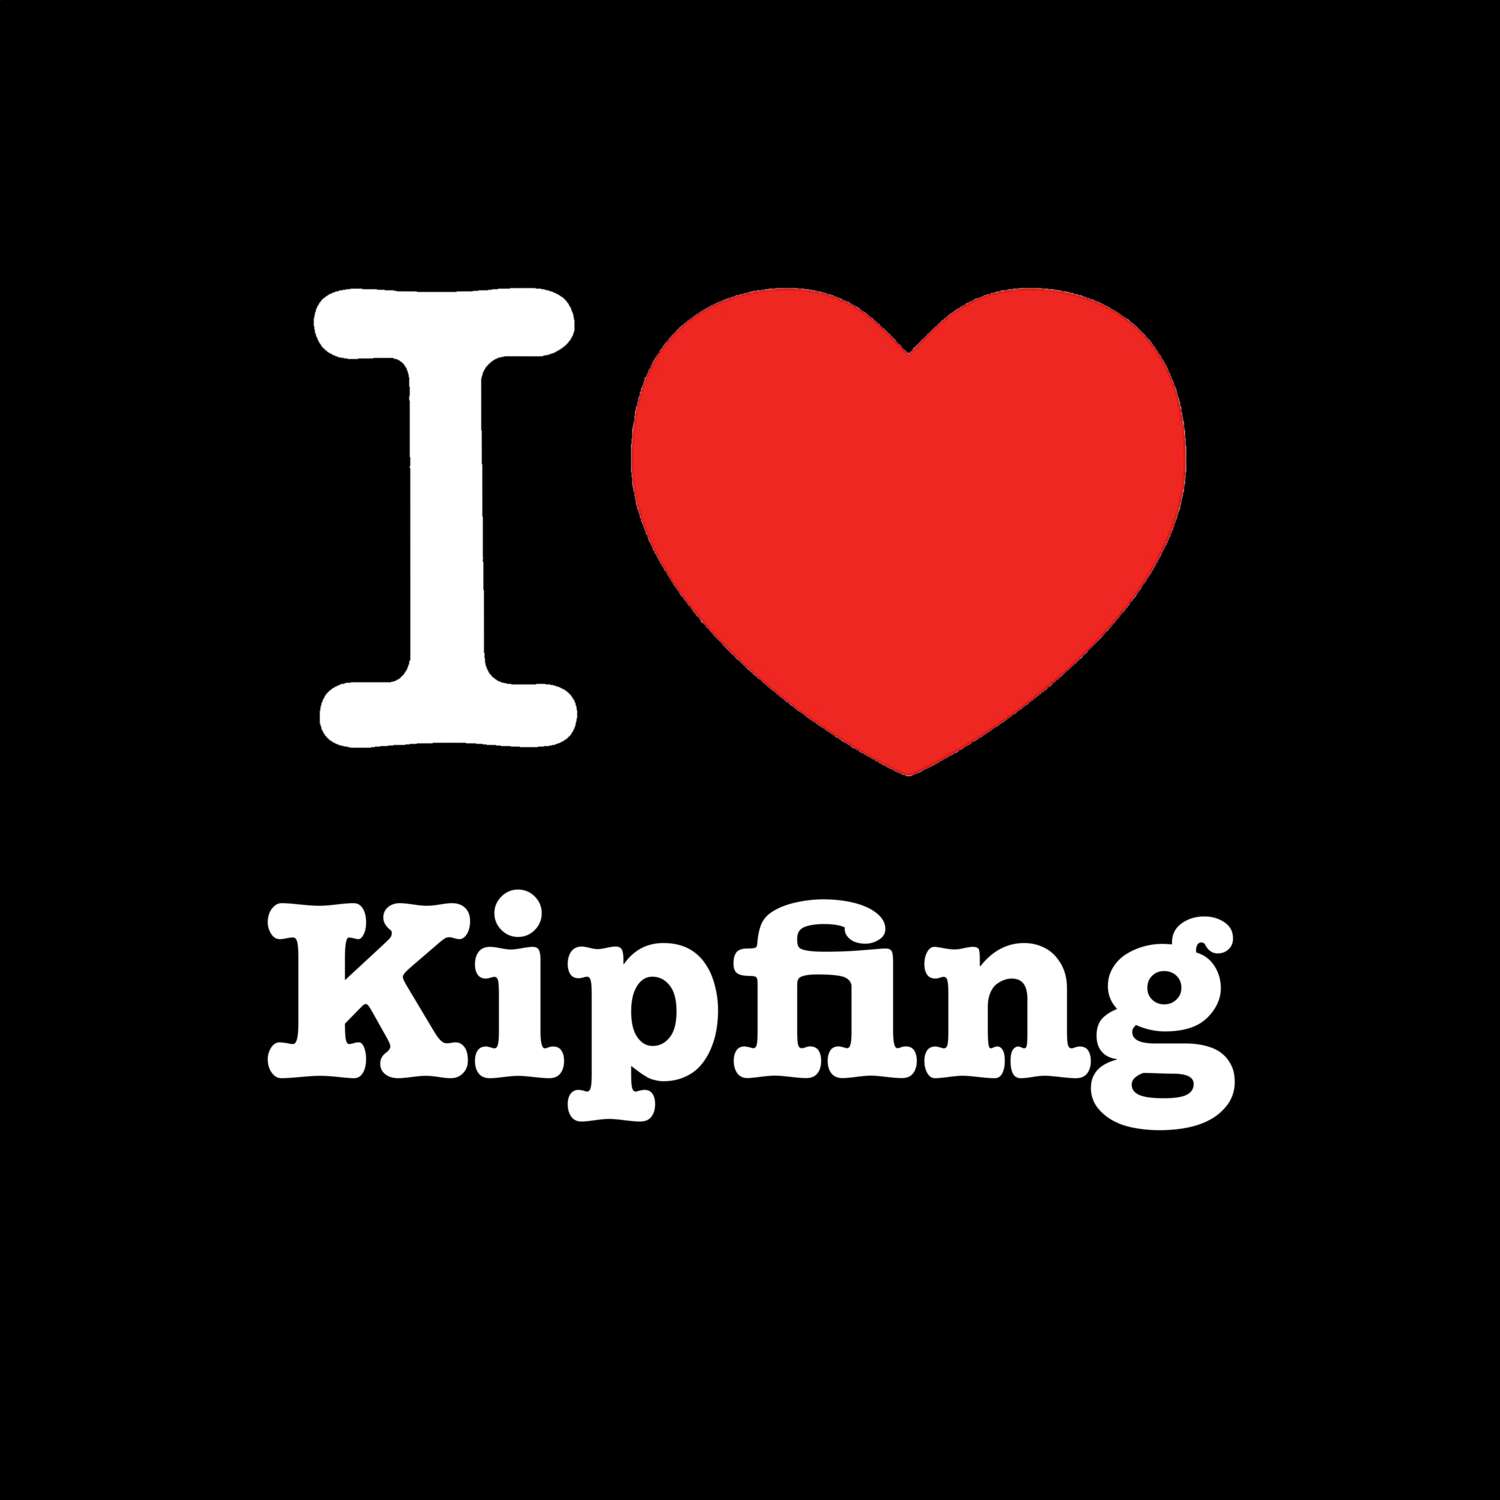 Kipfing T-Shirt »I love«